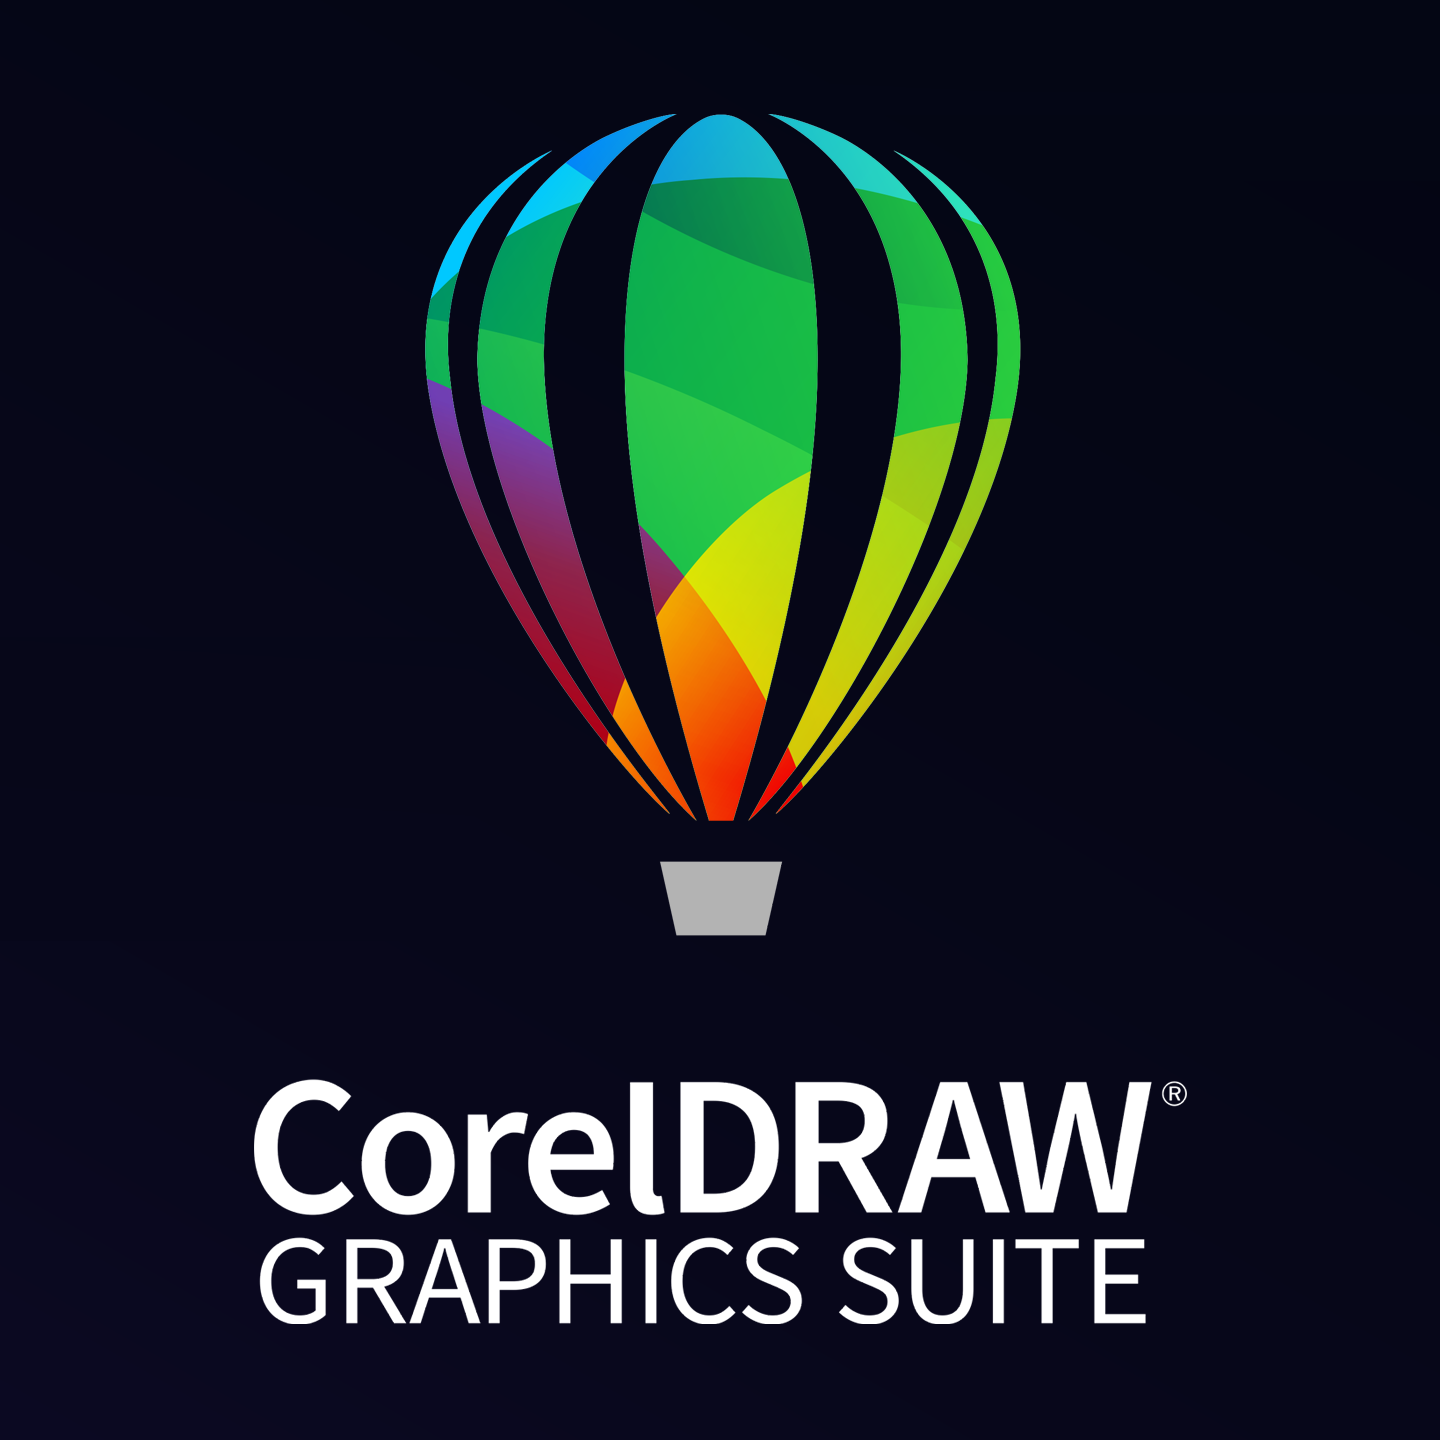 CorelDRAW Graphics Suite - Abonnement-Lizenz (2 Jahre) - 1 Benutzer - Win - Multi-Lingual